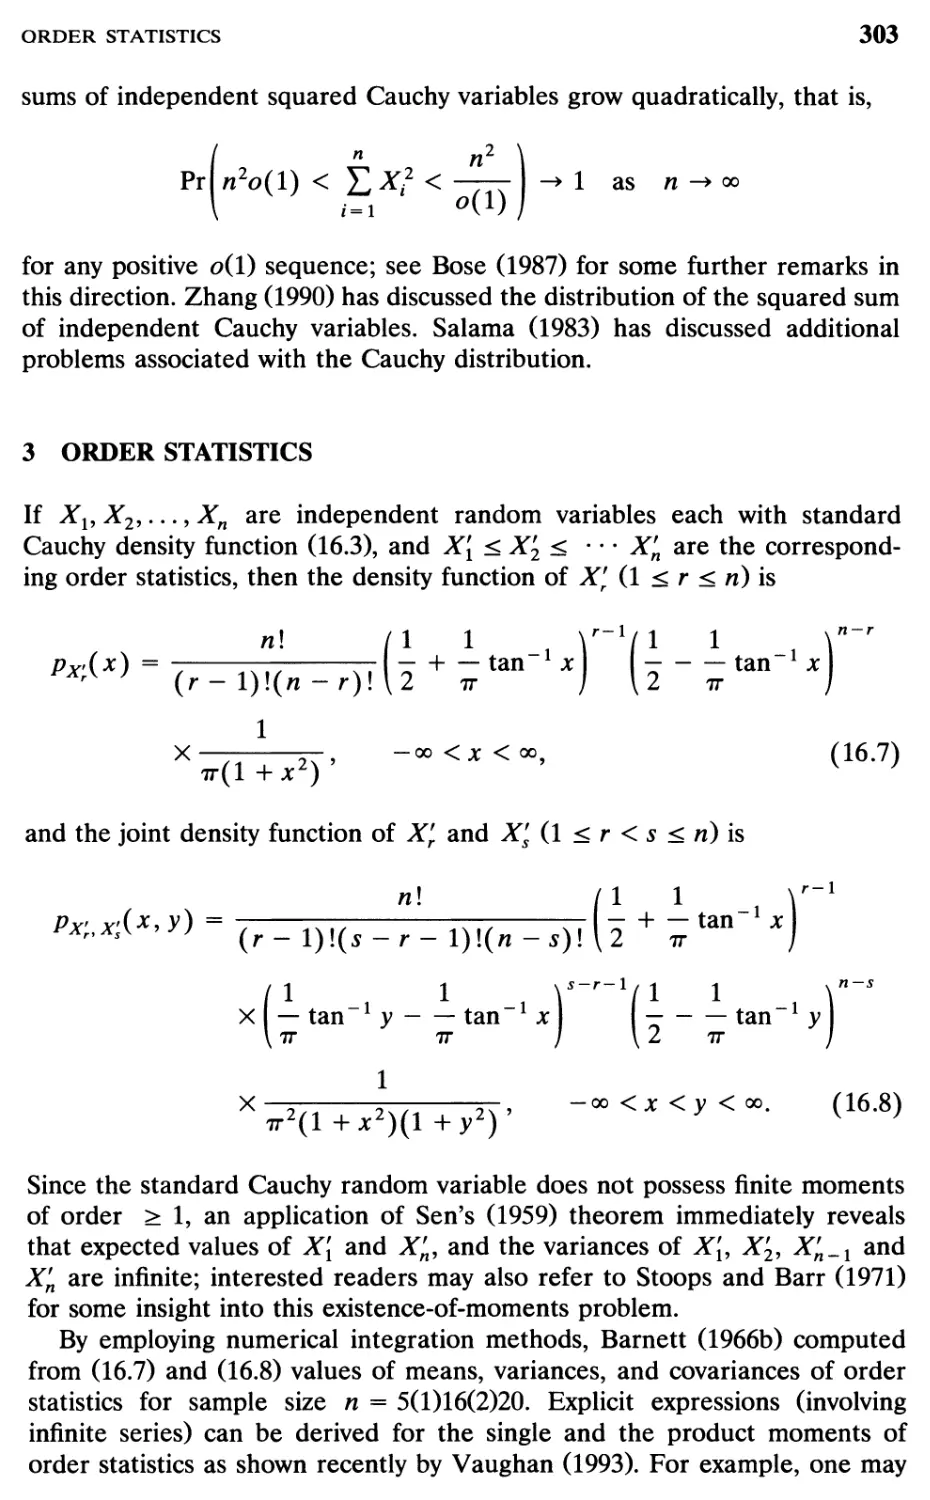 3 Order Statistics, 303